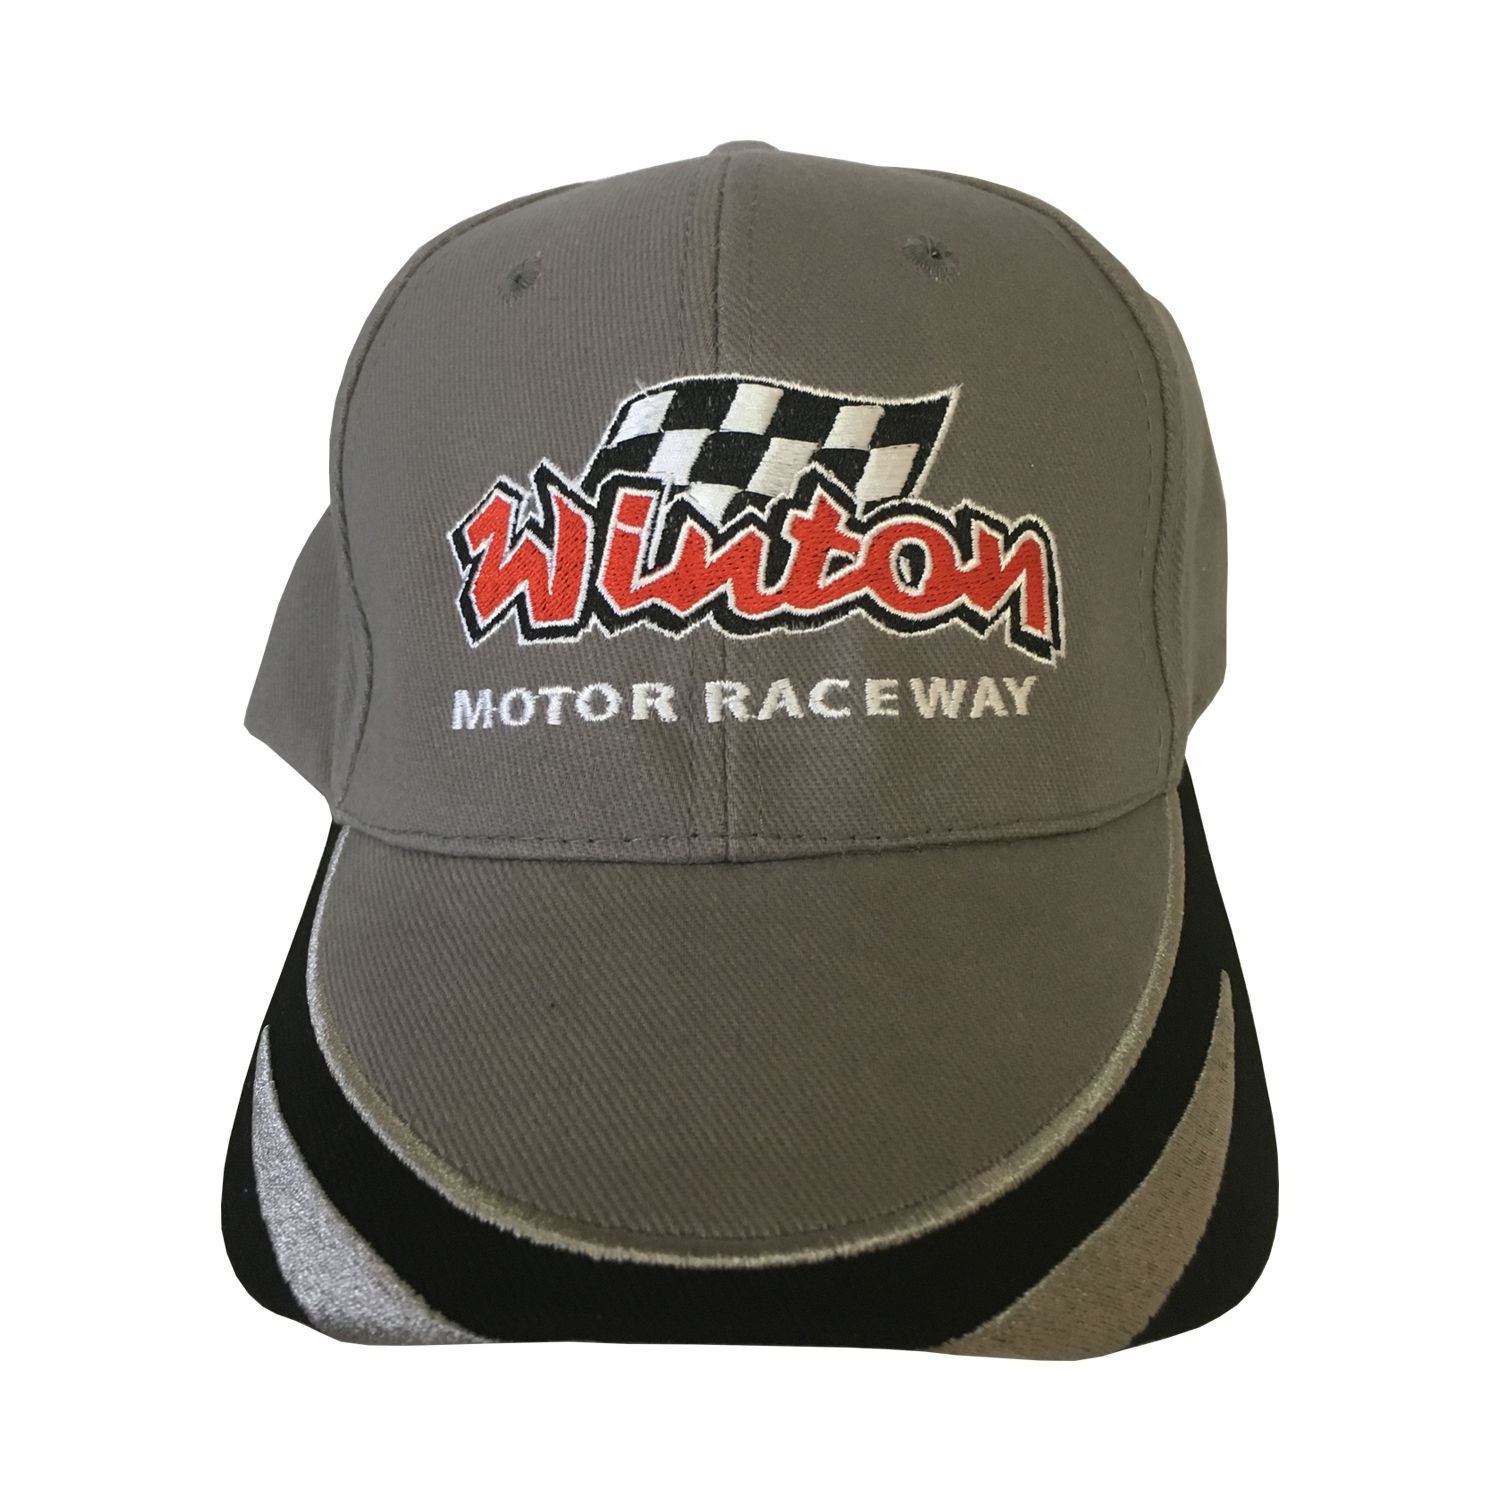 Winton Motor Raceway V8 Supercars